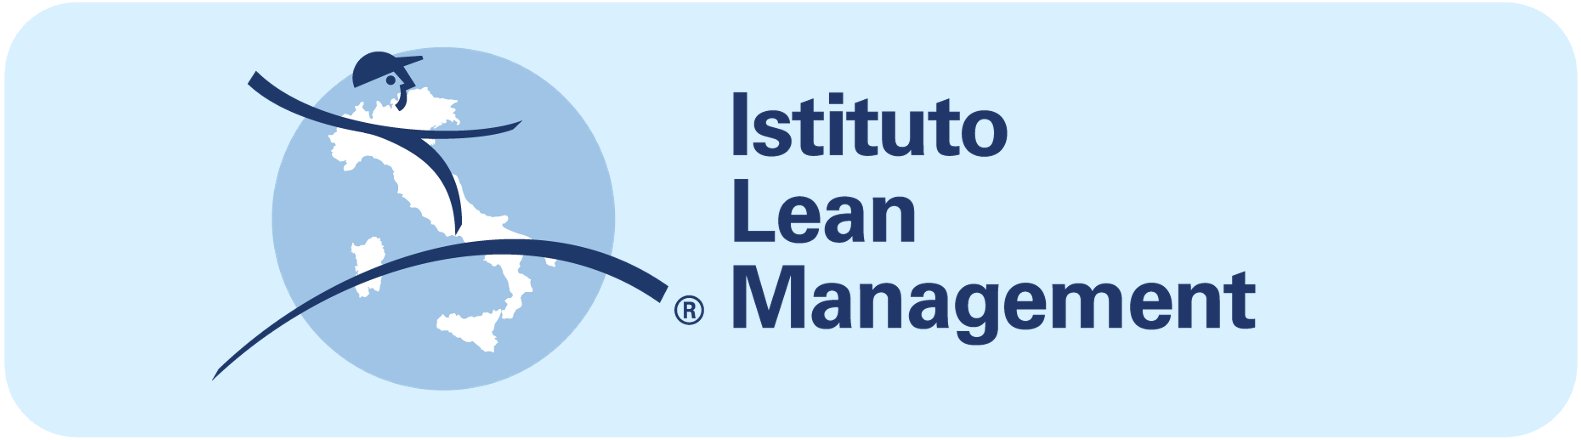 ILM-IT logo